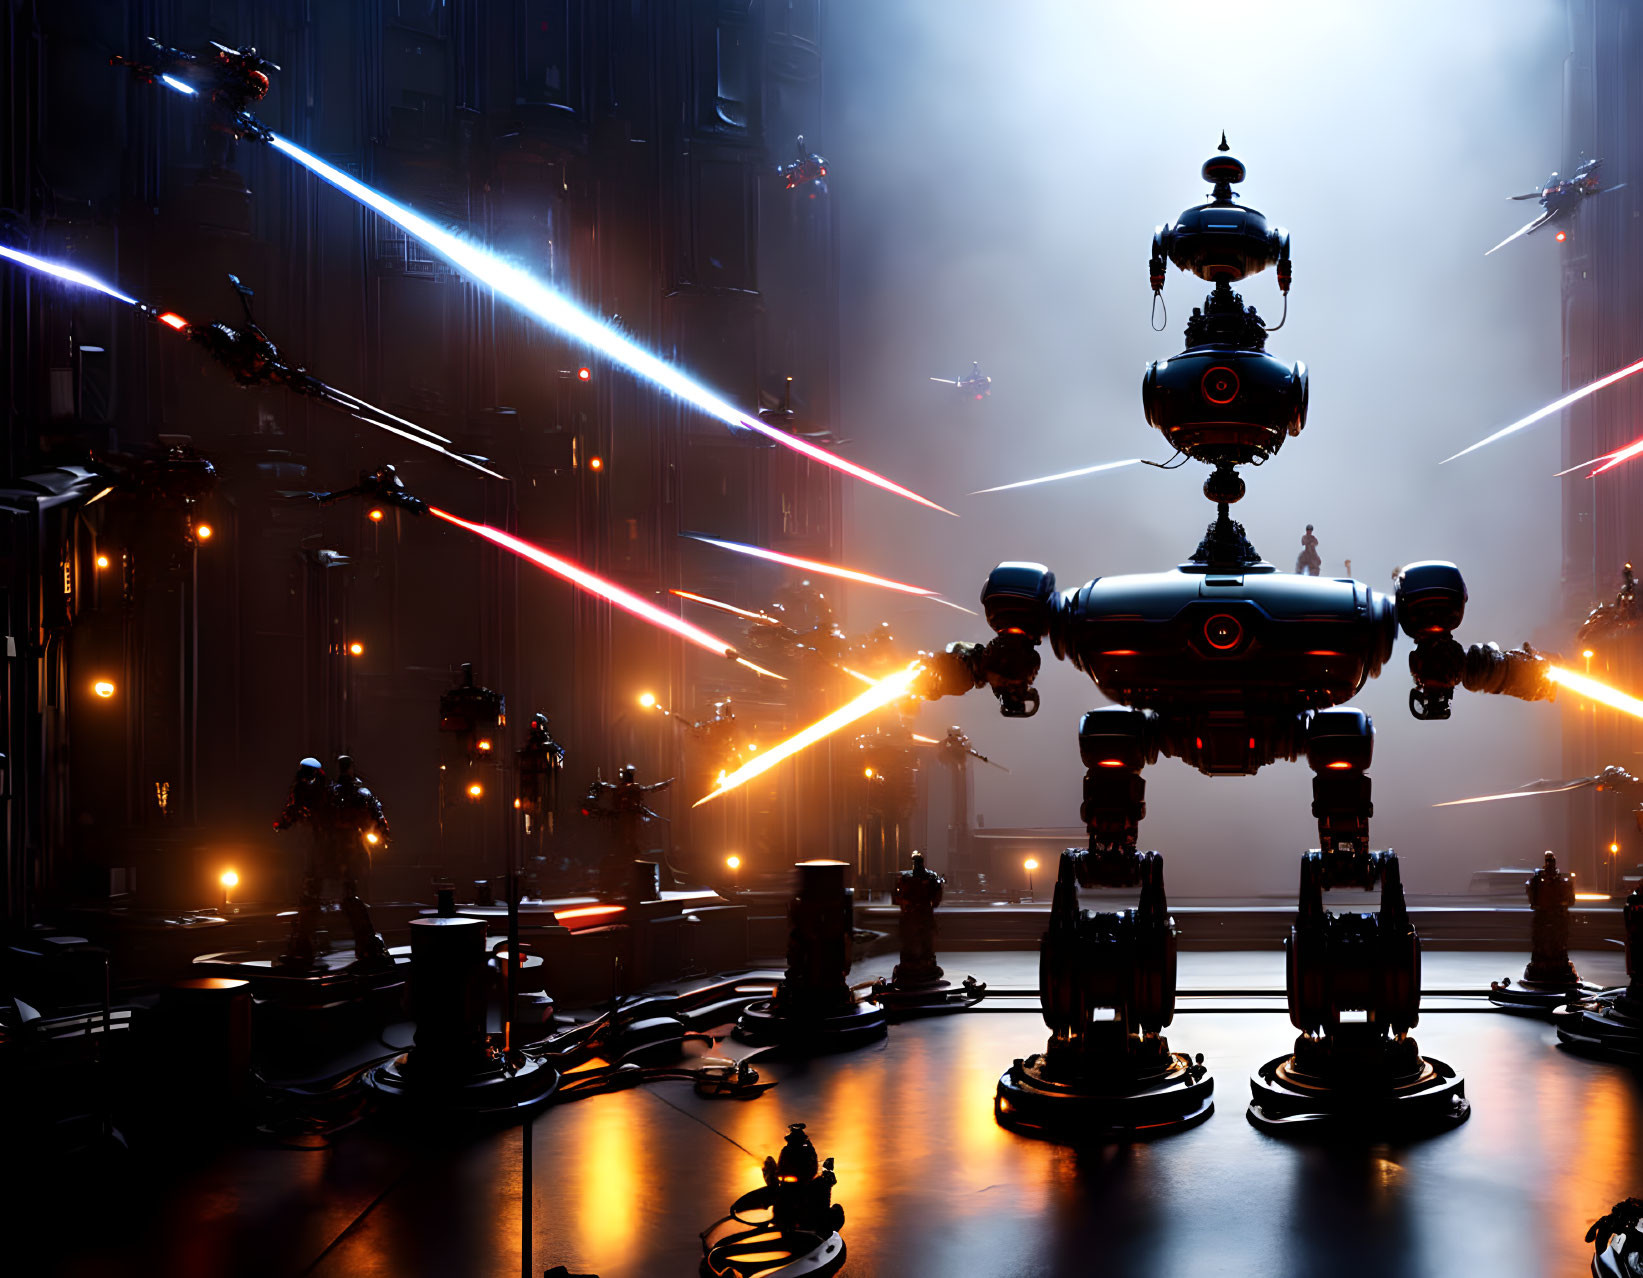 Futuristic robots in laser battle in dark, industrial setting